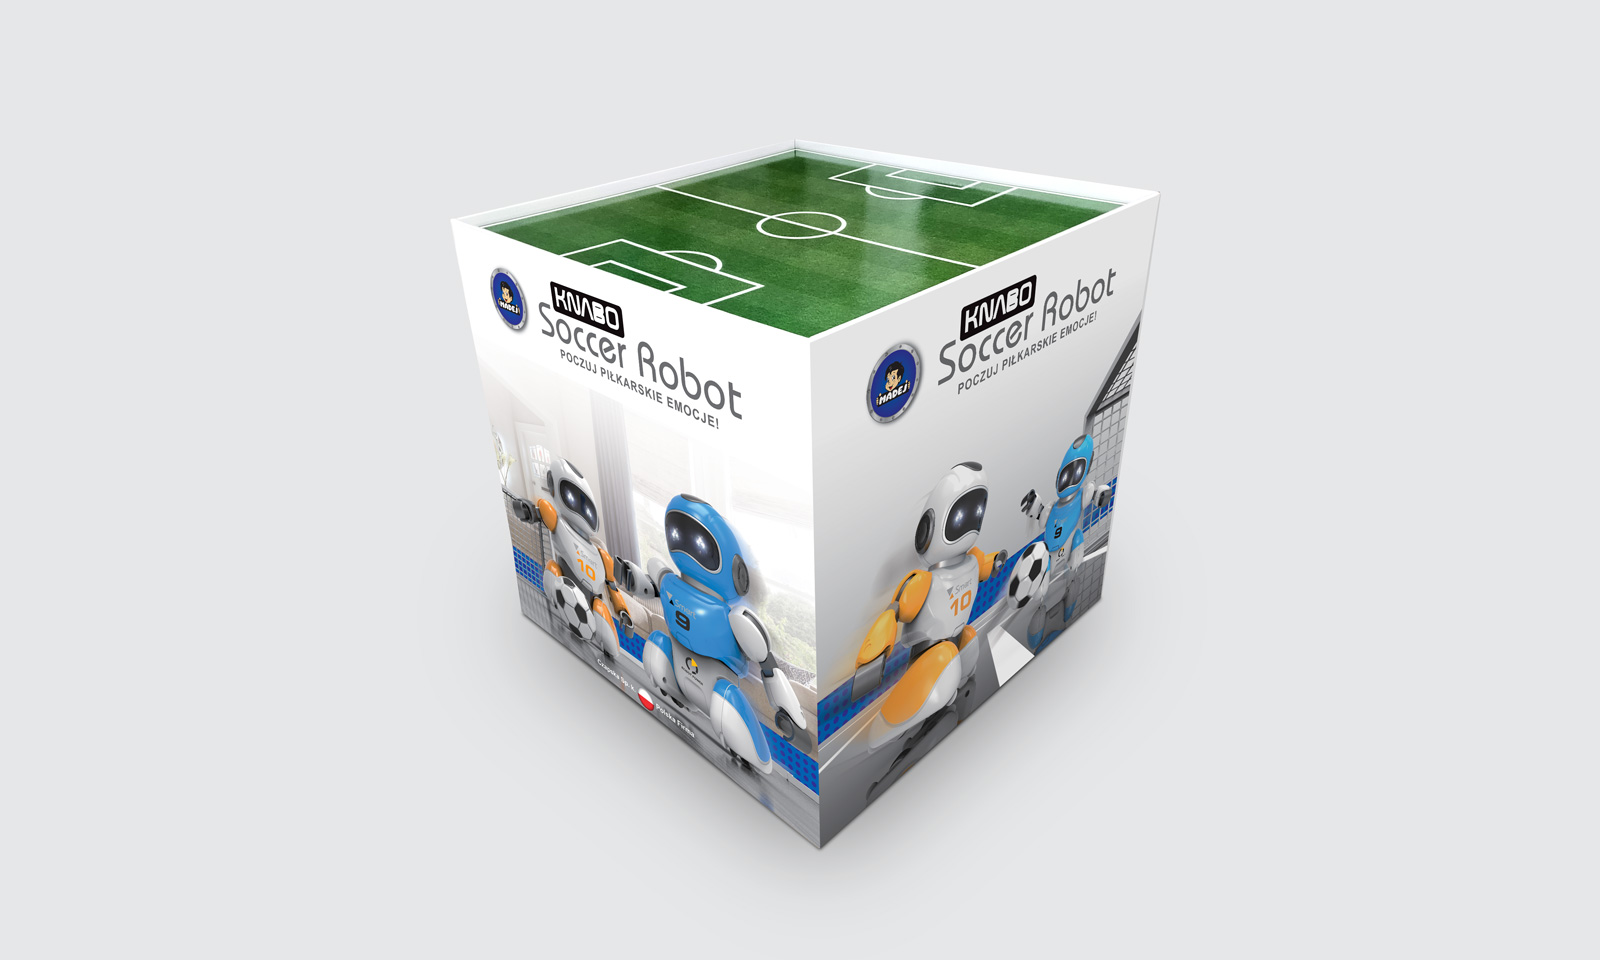 Ekspozytor Soccer Robot